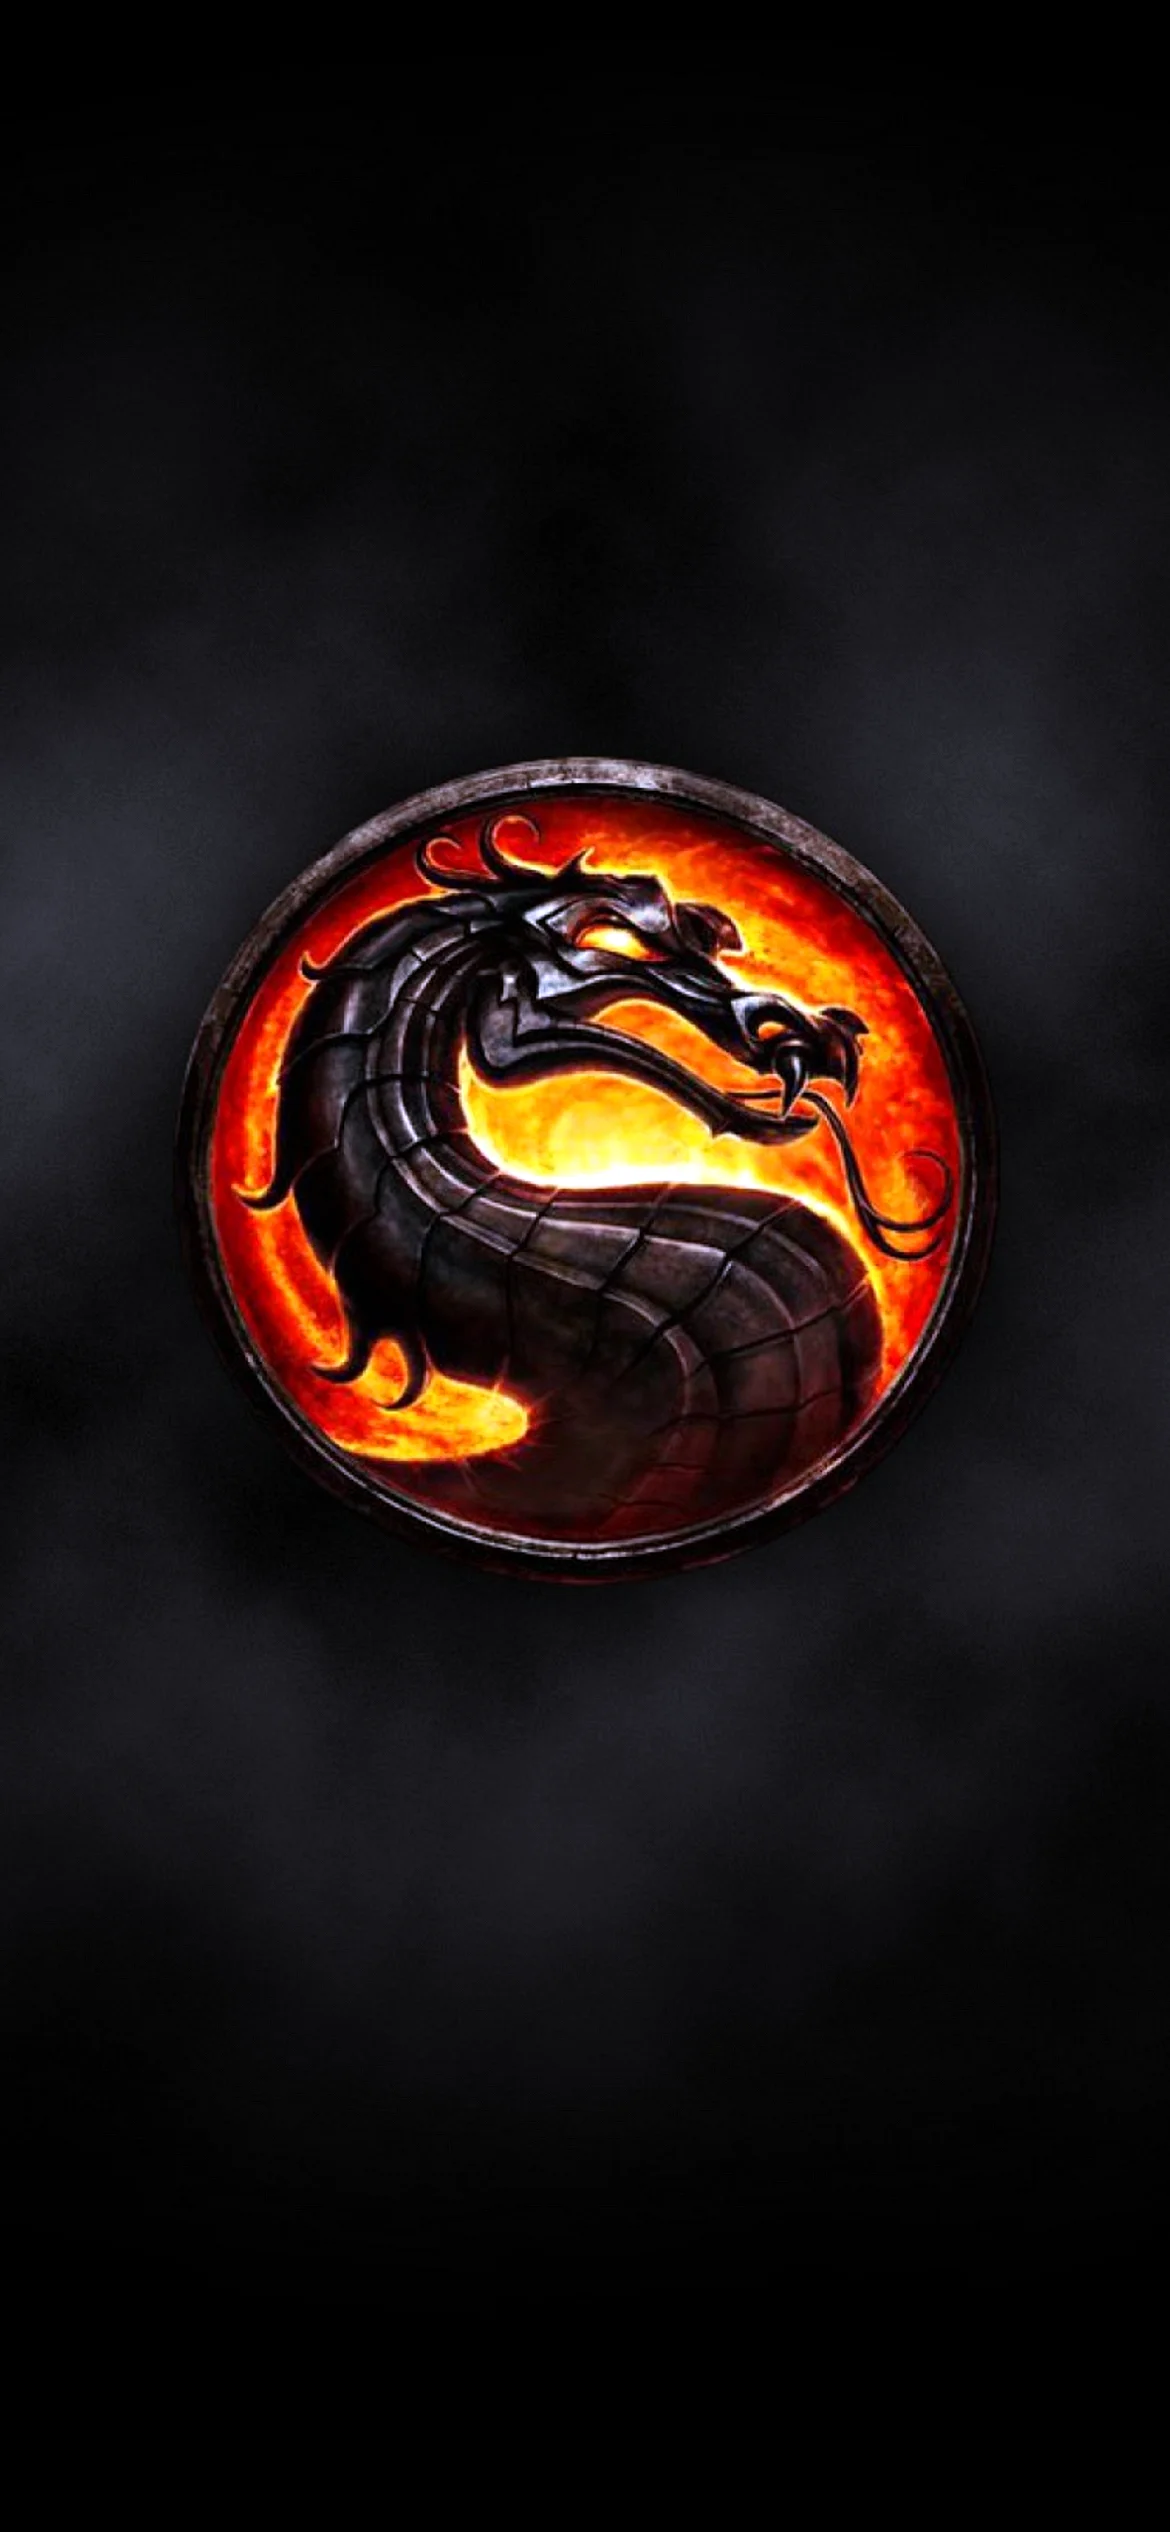 Mortal Kombat Arcade Kollection Wallpaper For iPhone